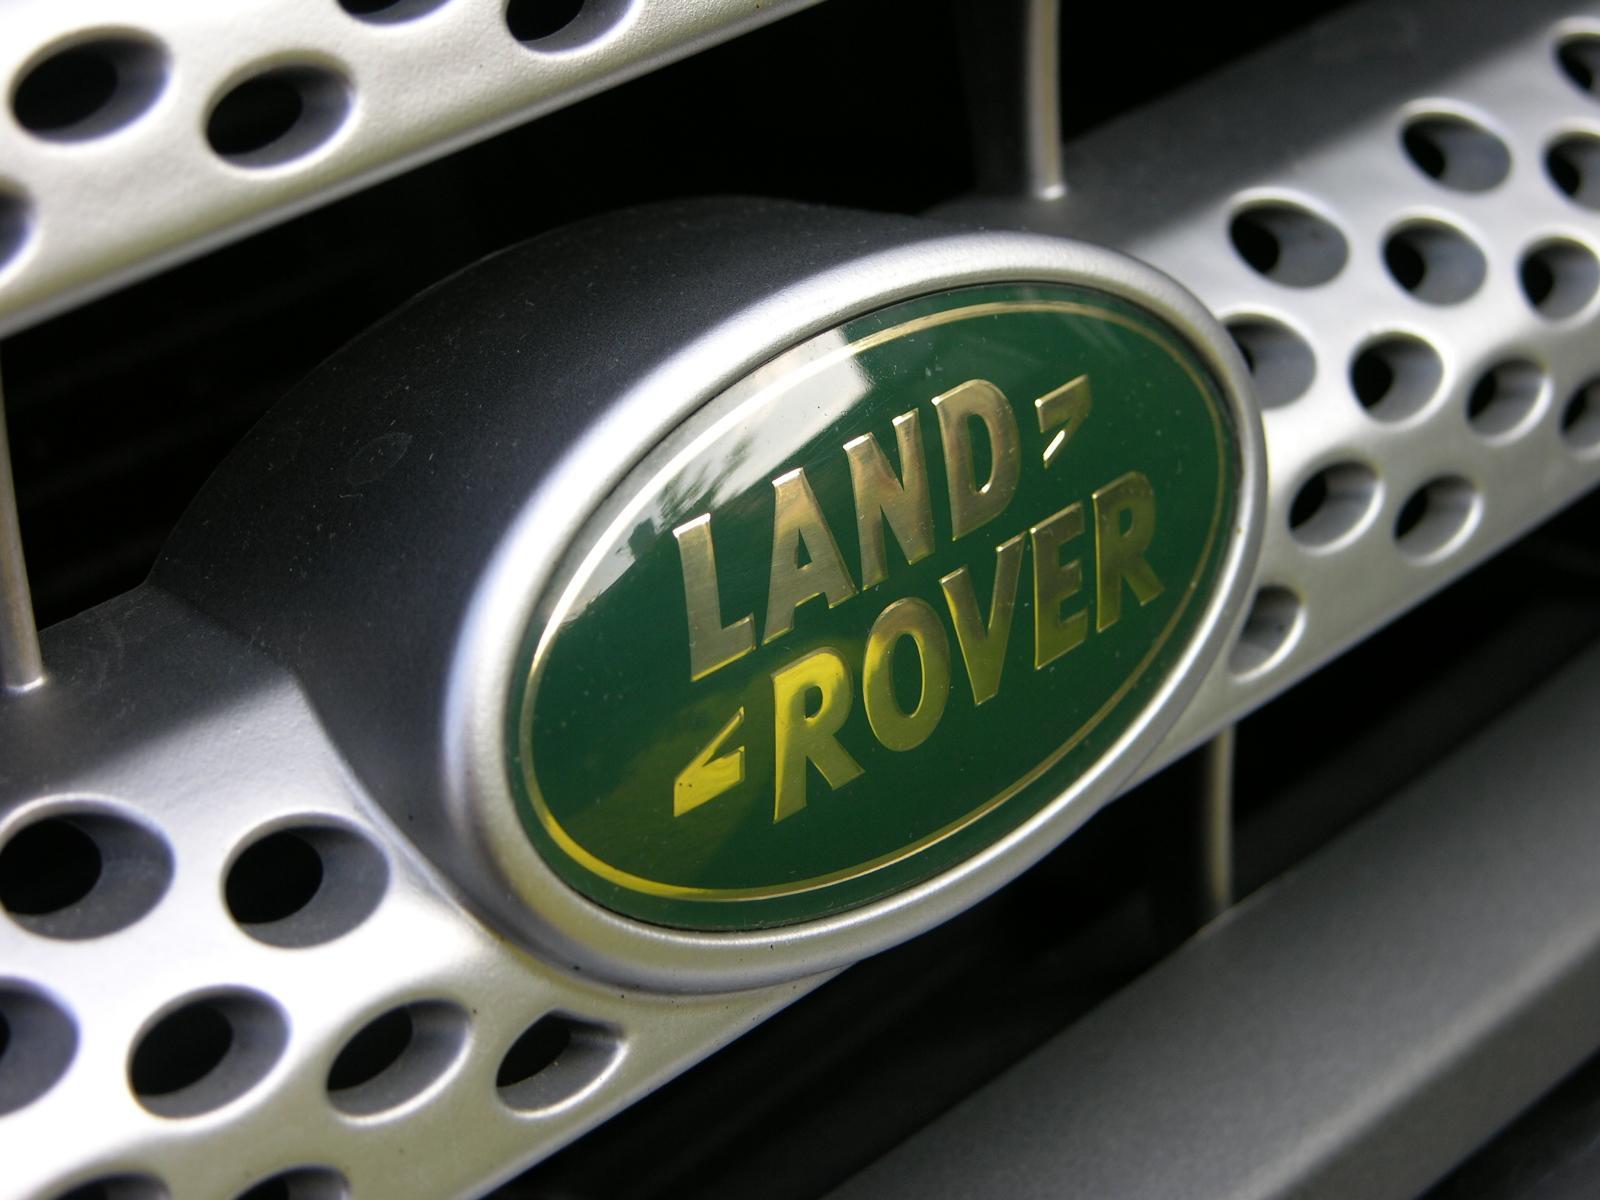 Land Rover Automotive Logo - Land Rover Logo, Land Rover Car Symbol Meaning and History | Car ...